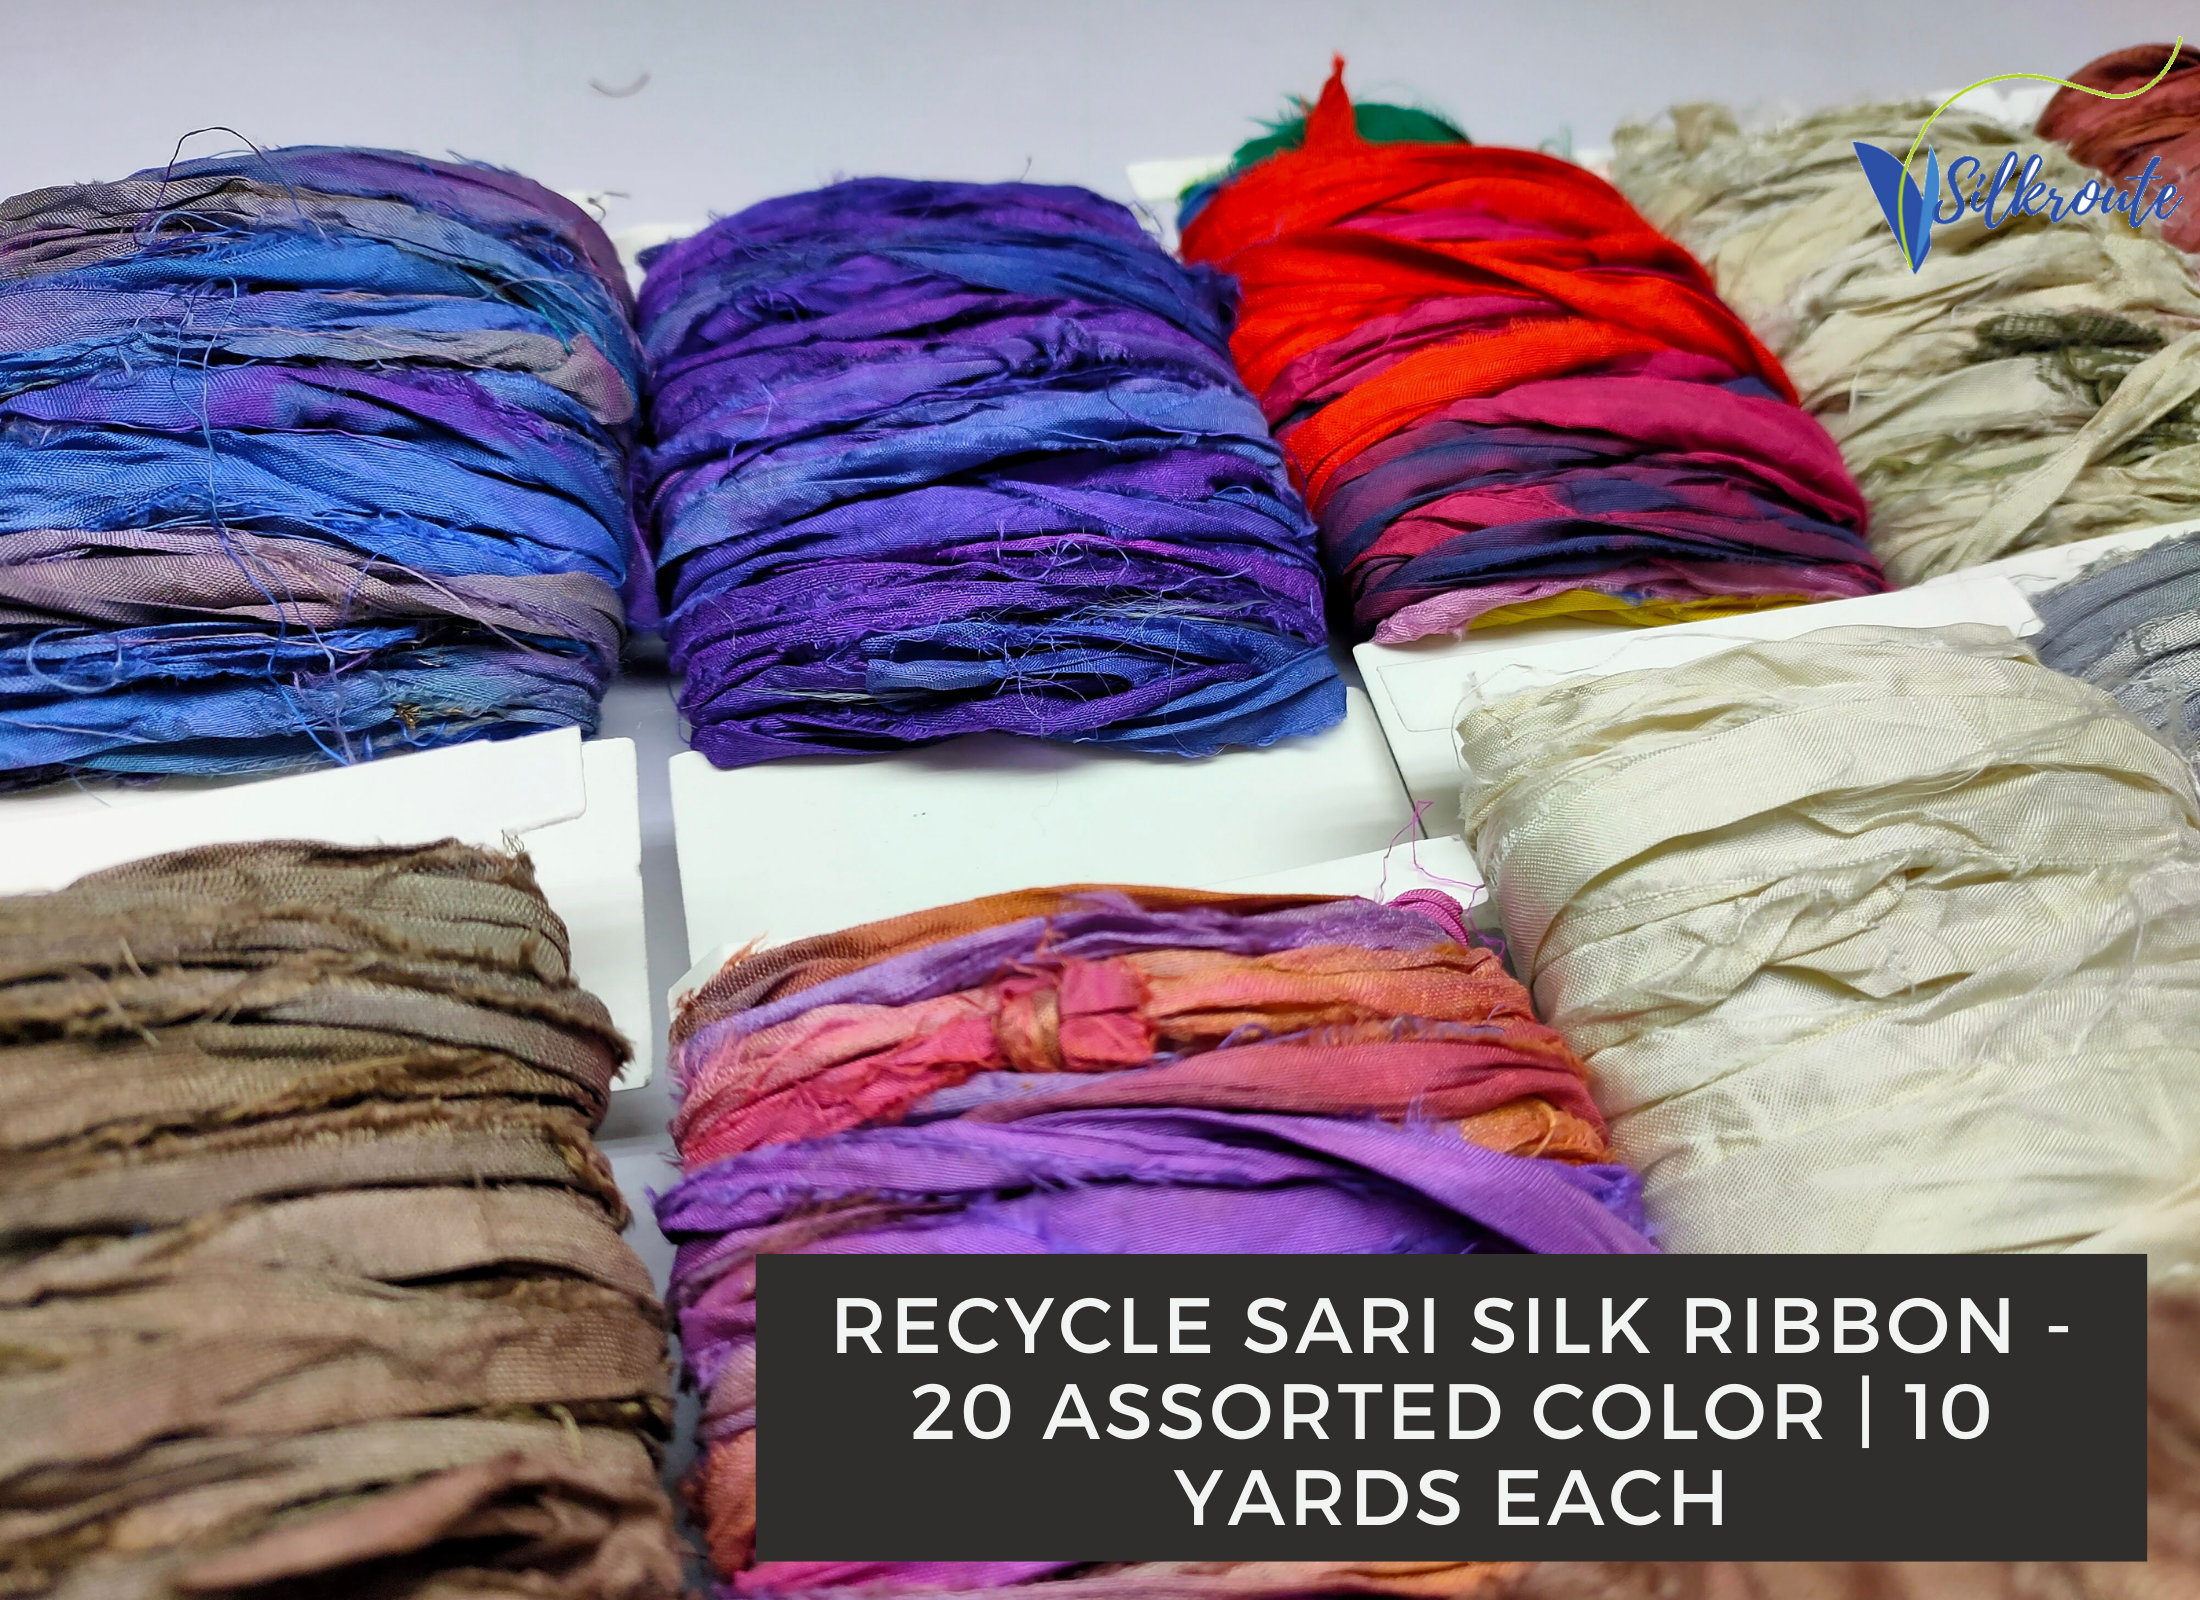 Burlap Ribbon - Recycle Burlap Ribbon - Jute Ribbon - SilkRouteIndia